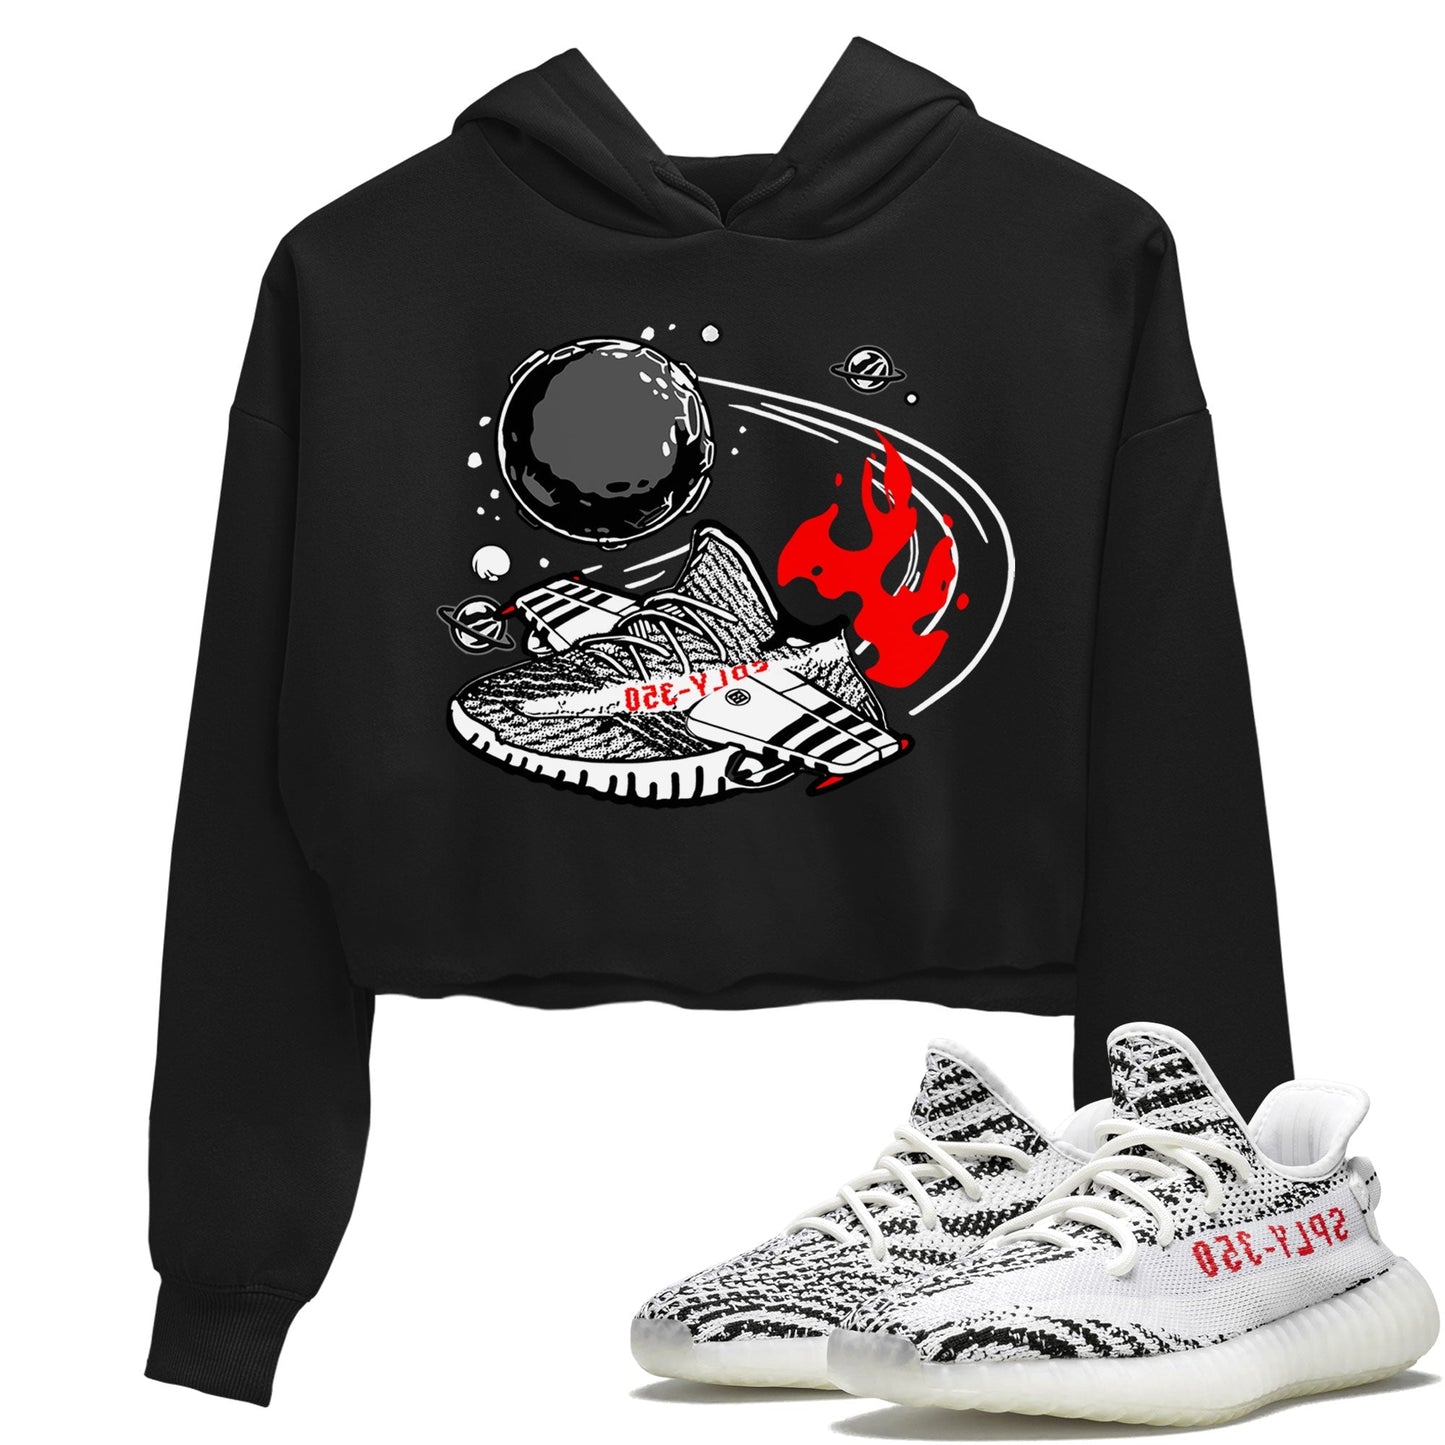 Yeezy 350 Zebra shirt to match Yeezys Rocket Boost Streetwear Sneaker Shirt Yeezy Boost 350 V2 Zebra Drip Gear Zone Sneaker Matching Clothing Black 1 Crop T-Shirt